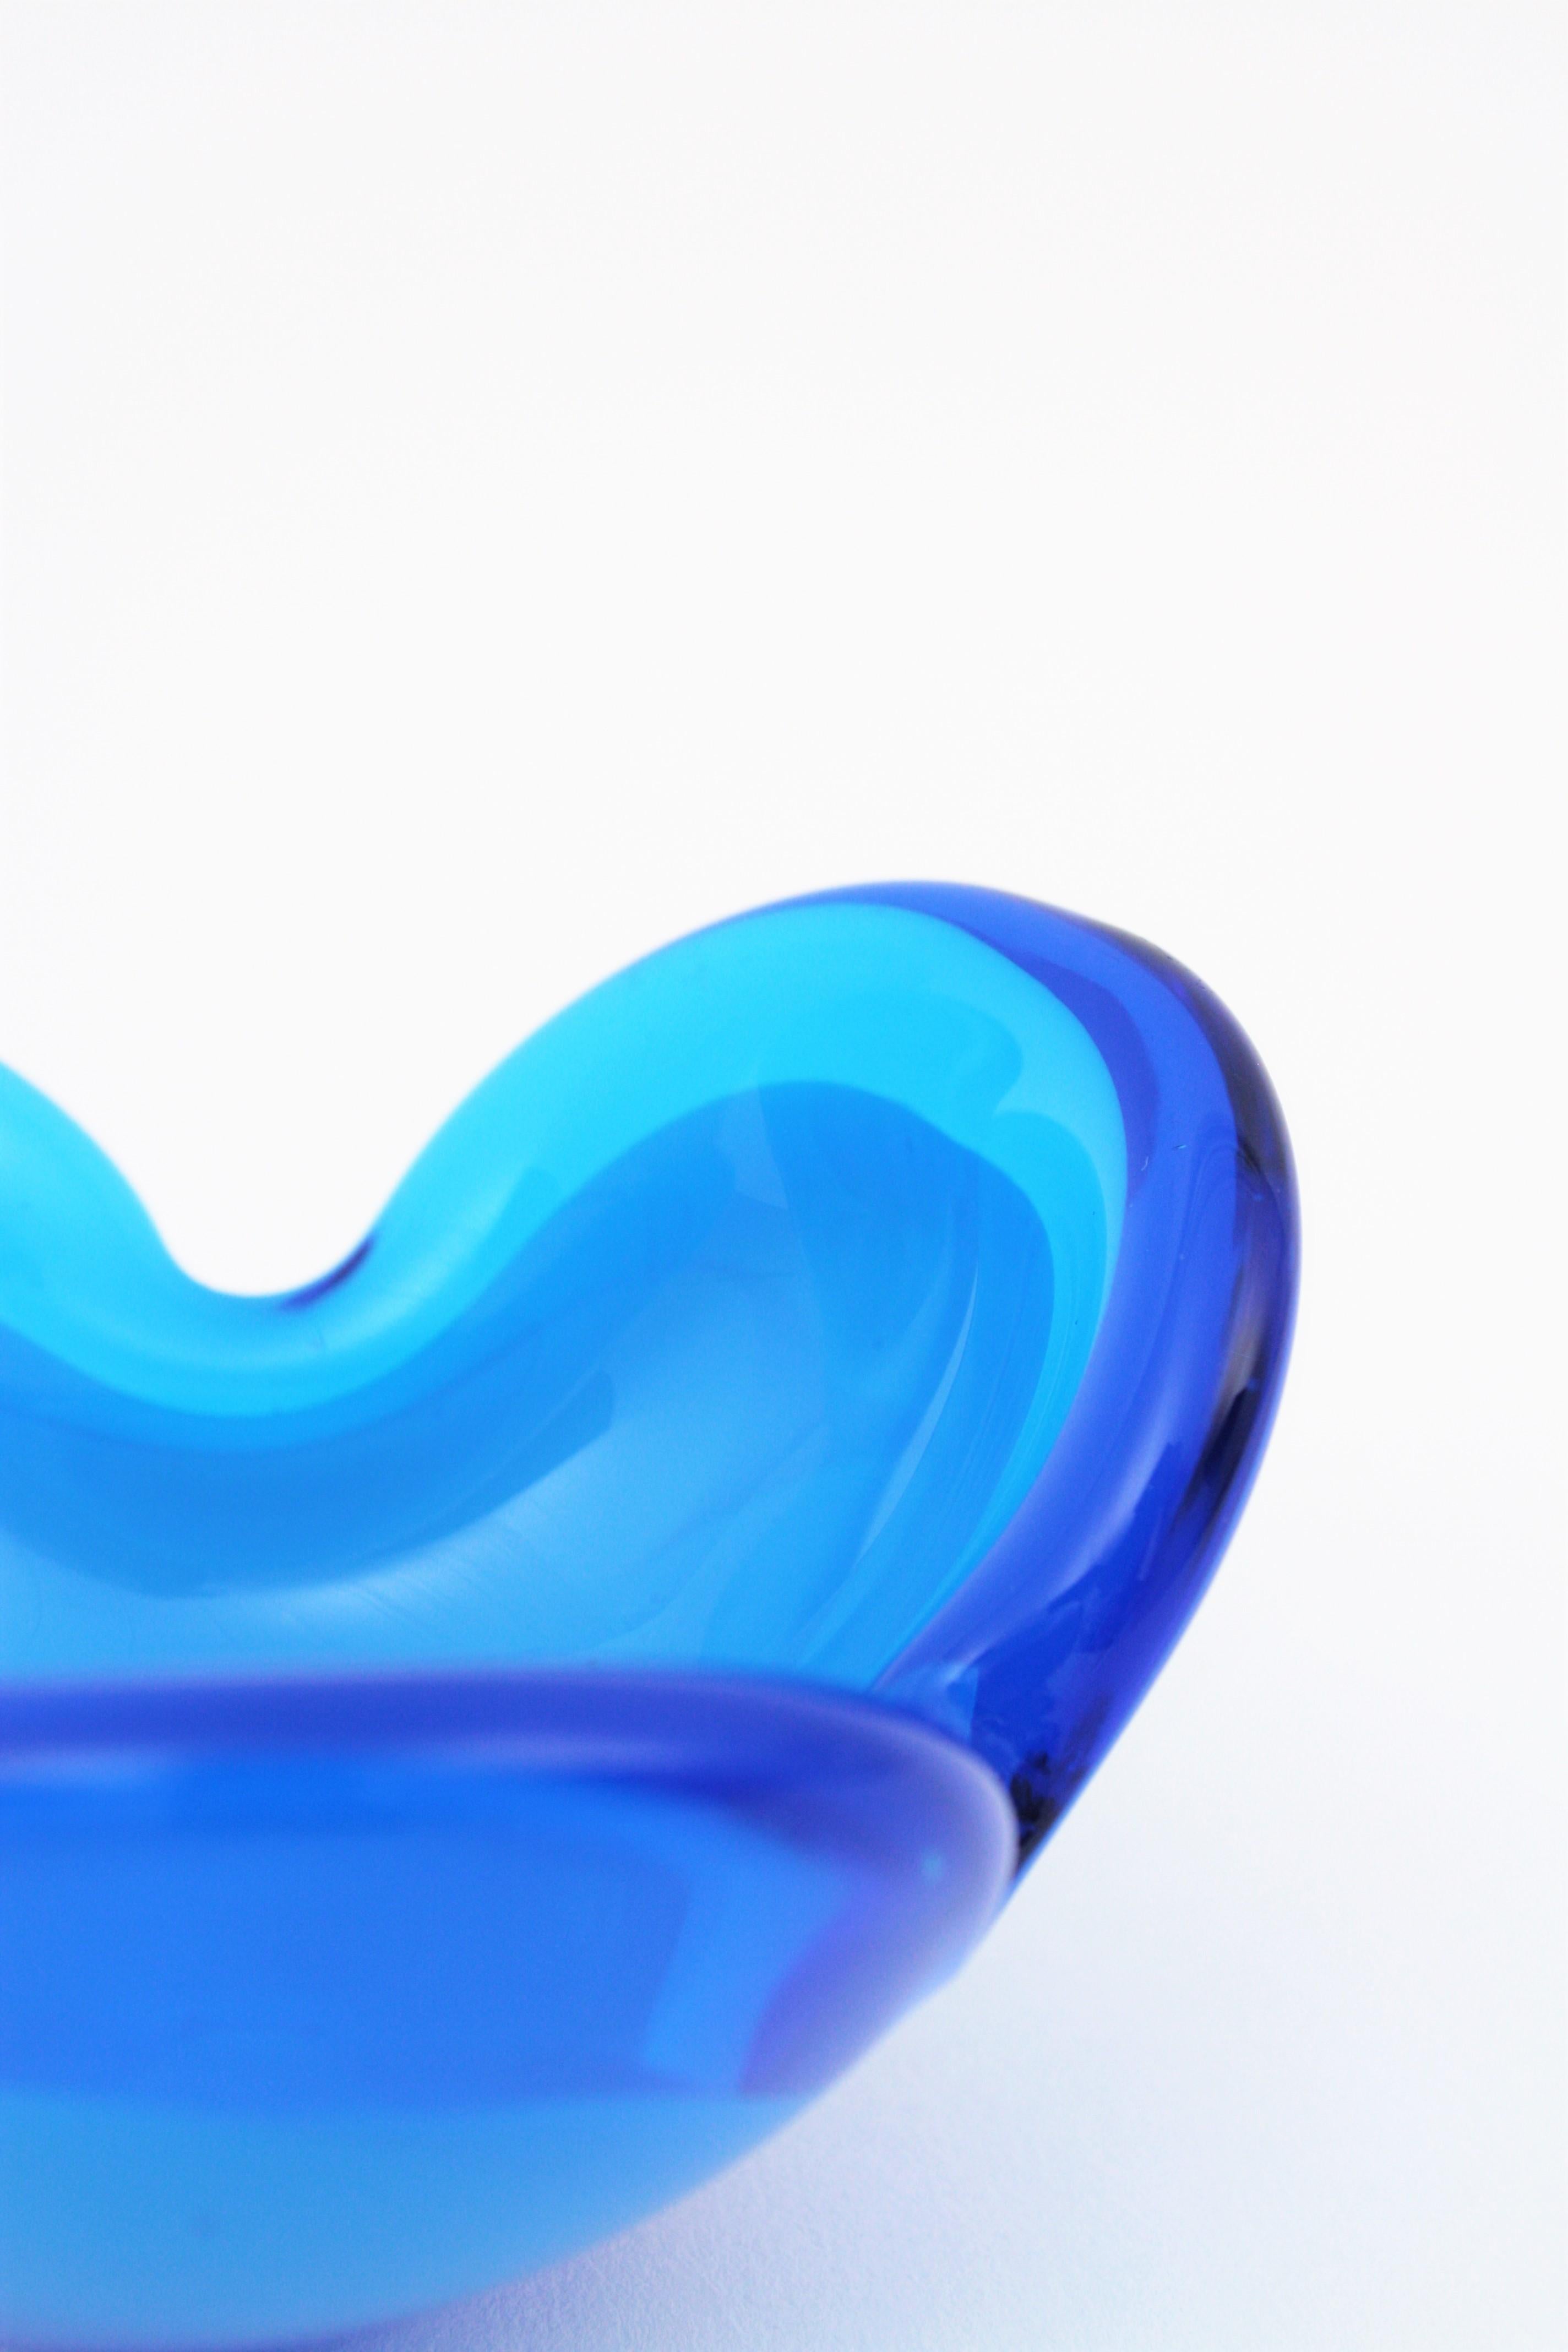 Seguso Murano Midcentury Blue Italian Art Glass Bowl For Sale 10